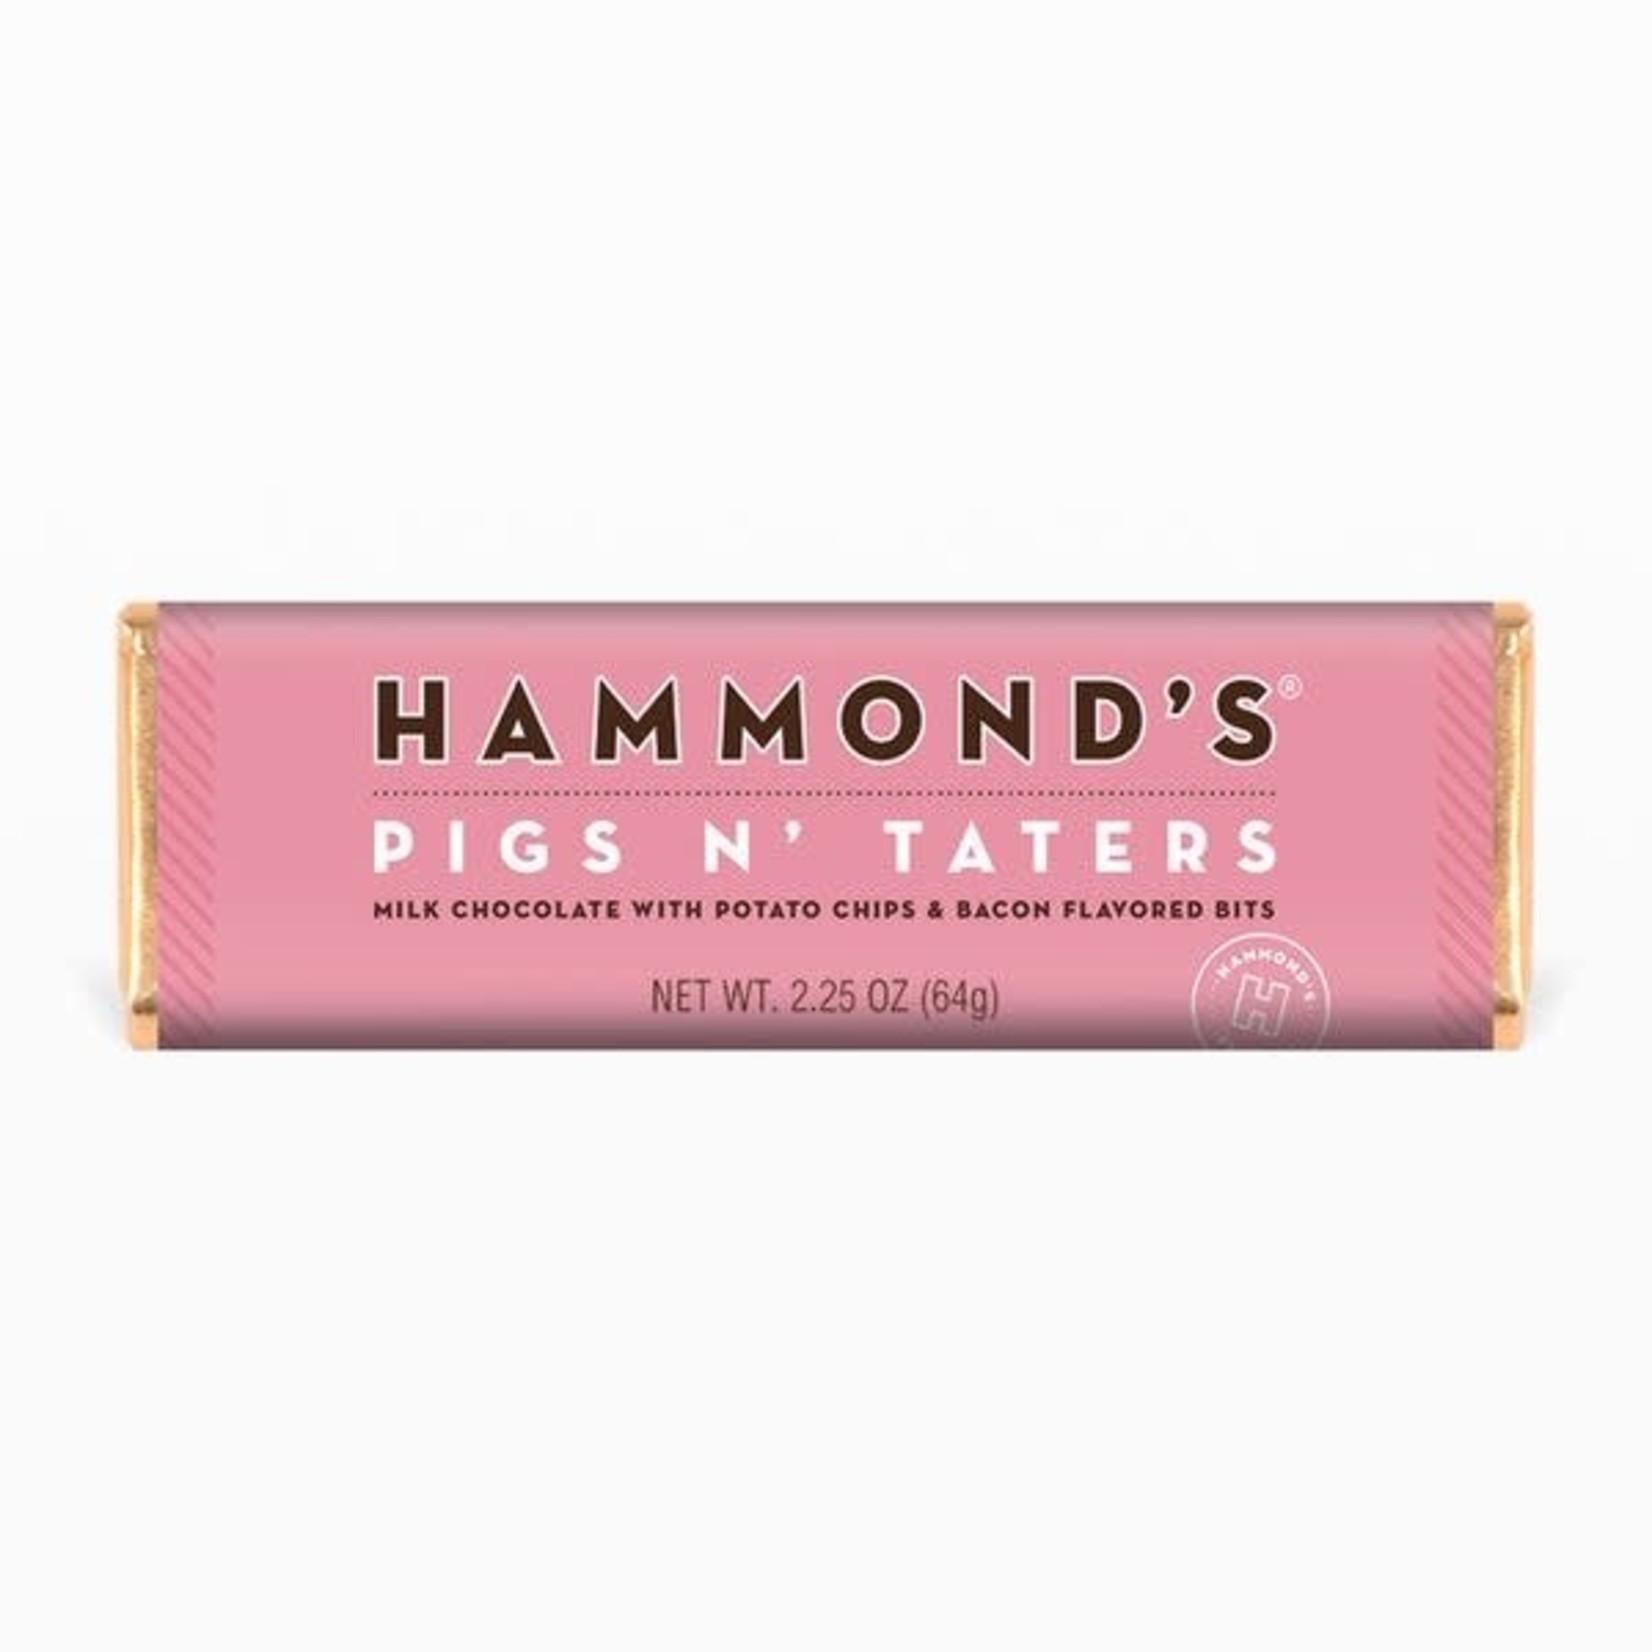 hammonds Hammond's Pigs n' Taters Milk Chocolate Bar